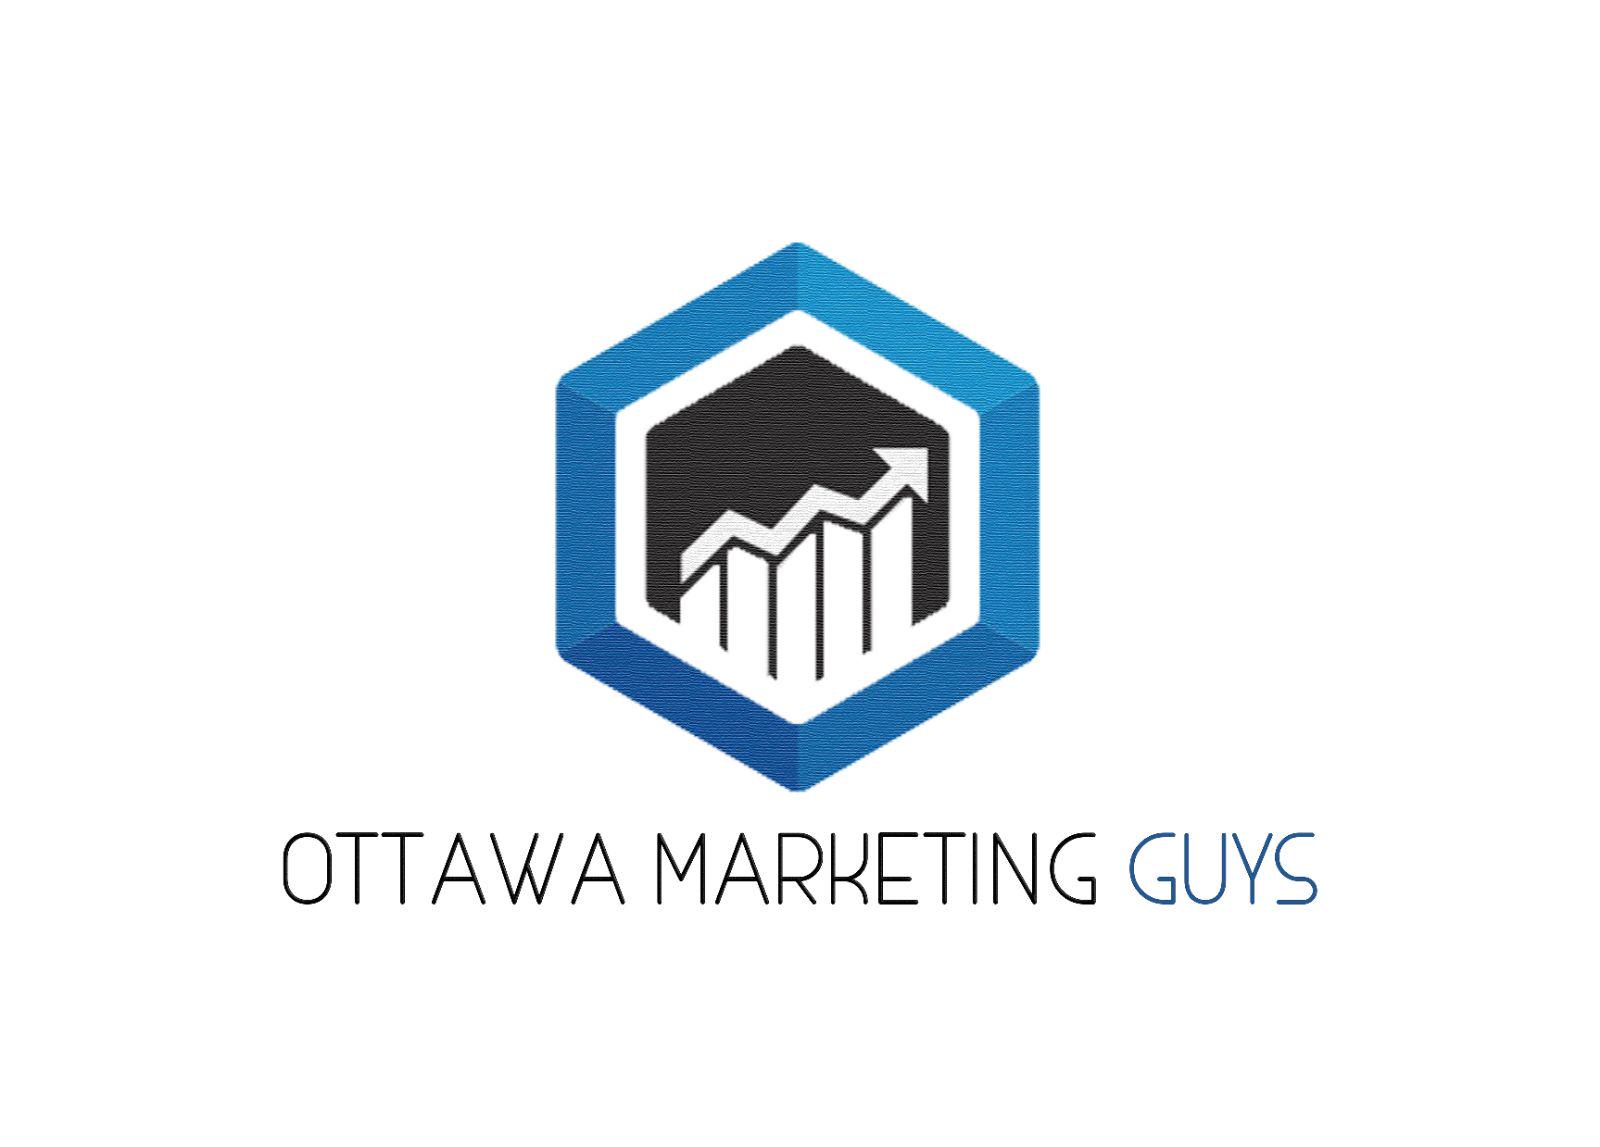 Ottawa Marketing Guys Inc. profile on Qualified.One